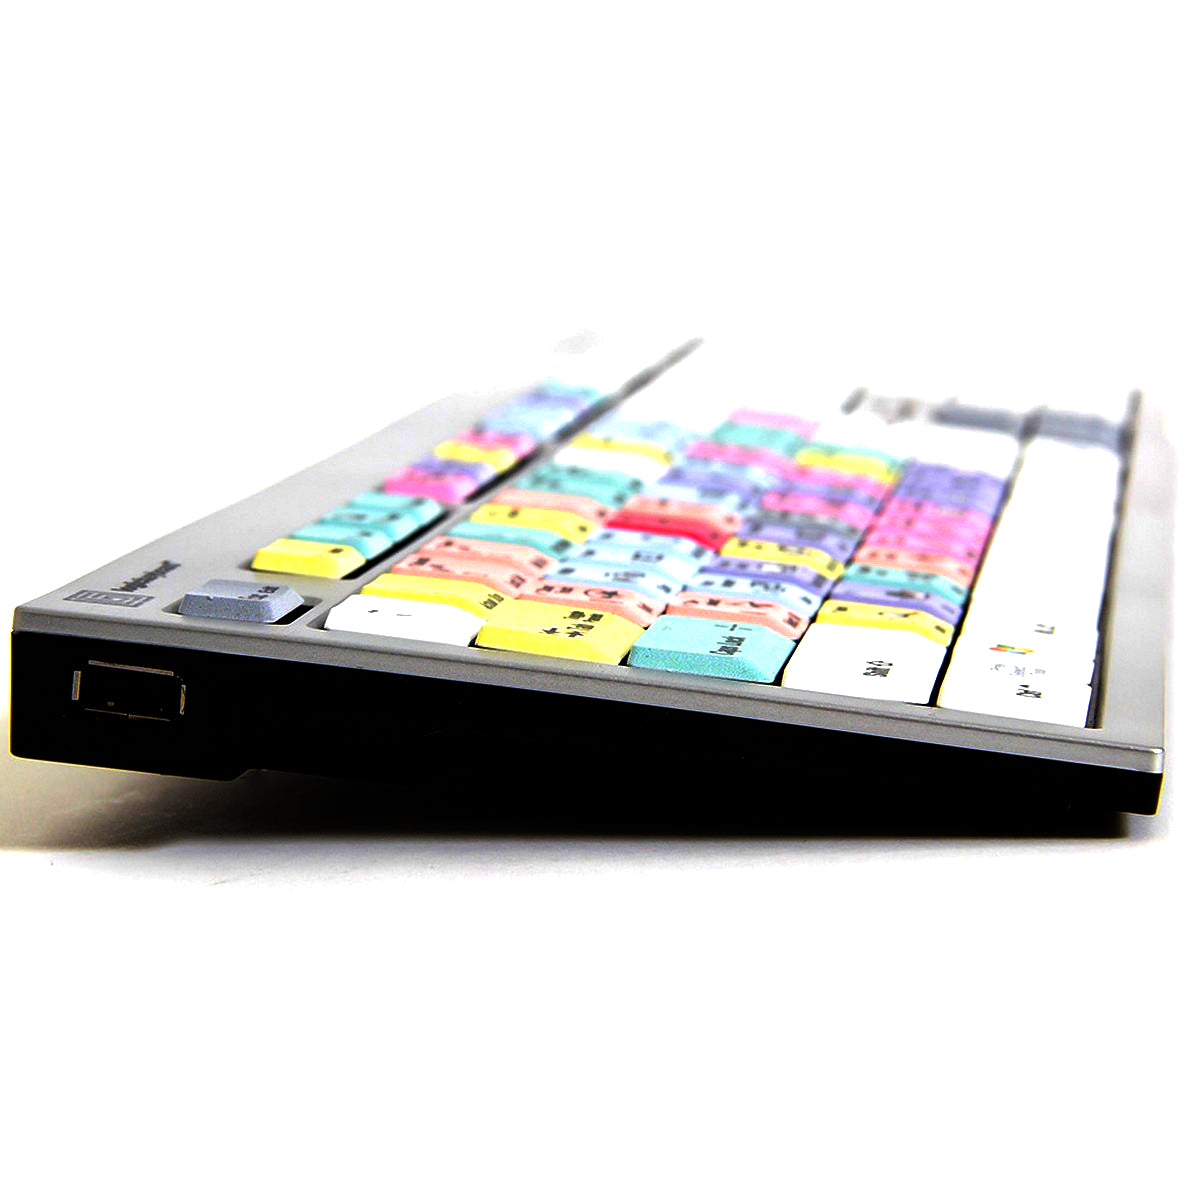 Logickeyboard Adobe Illustrator CC Slim Line PC Keyboard | Shortcut Keyboard for Adobe Illustrator CC